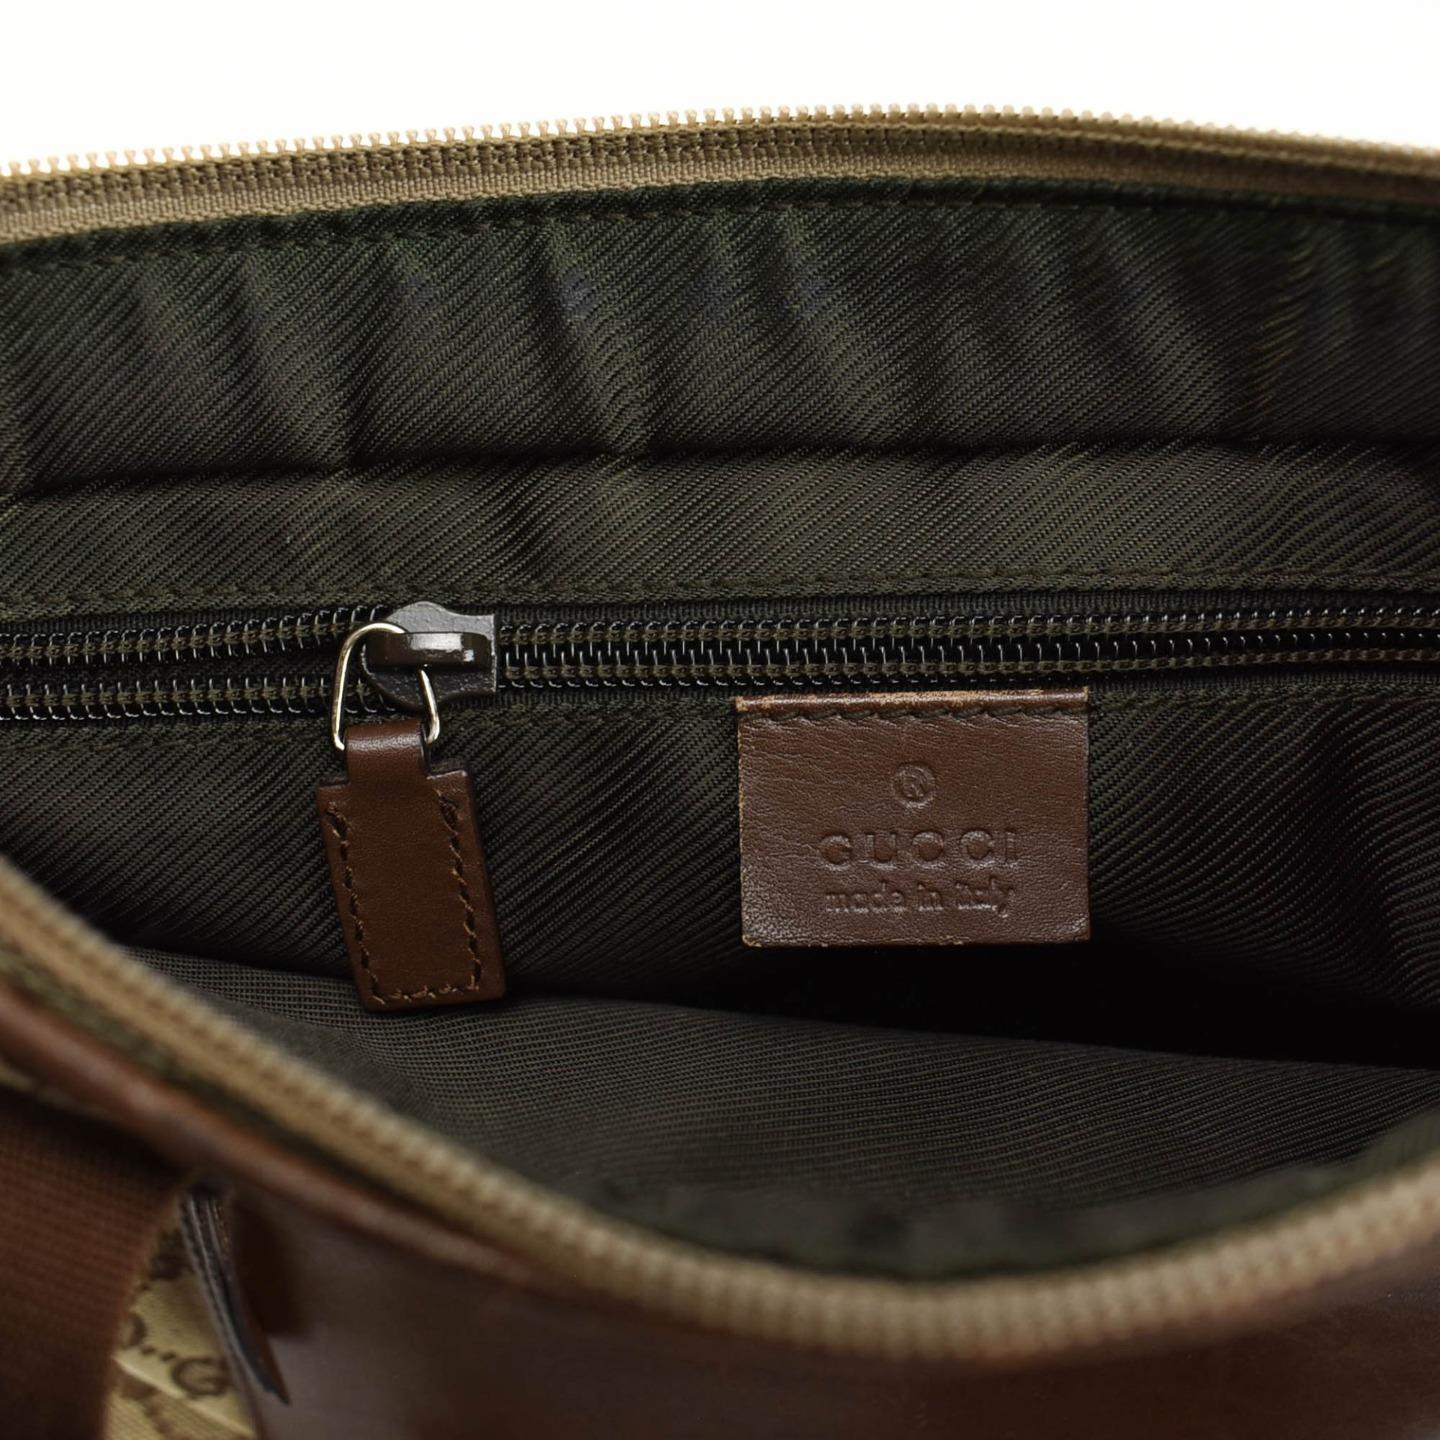 GUCCI: Beige, &quot;GG&quot; Logo & Leather Logo Shoulder/Tote Bag (sx) | eBay